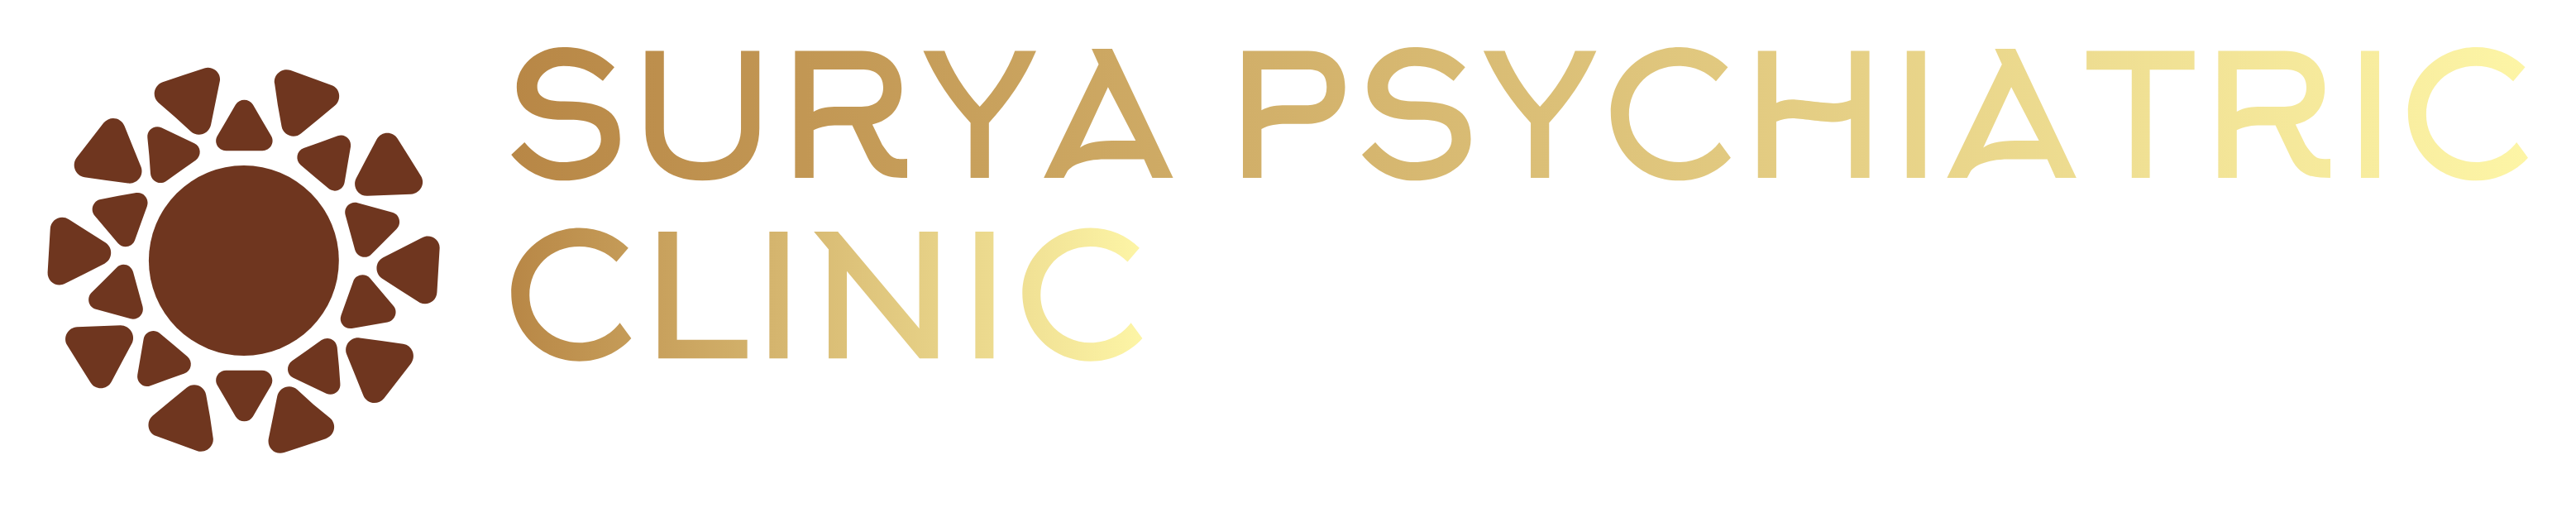 Surya Psychiatric Clinic